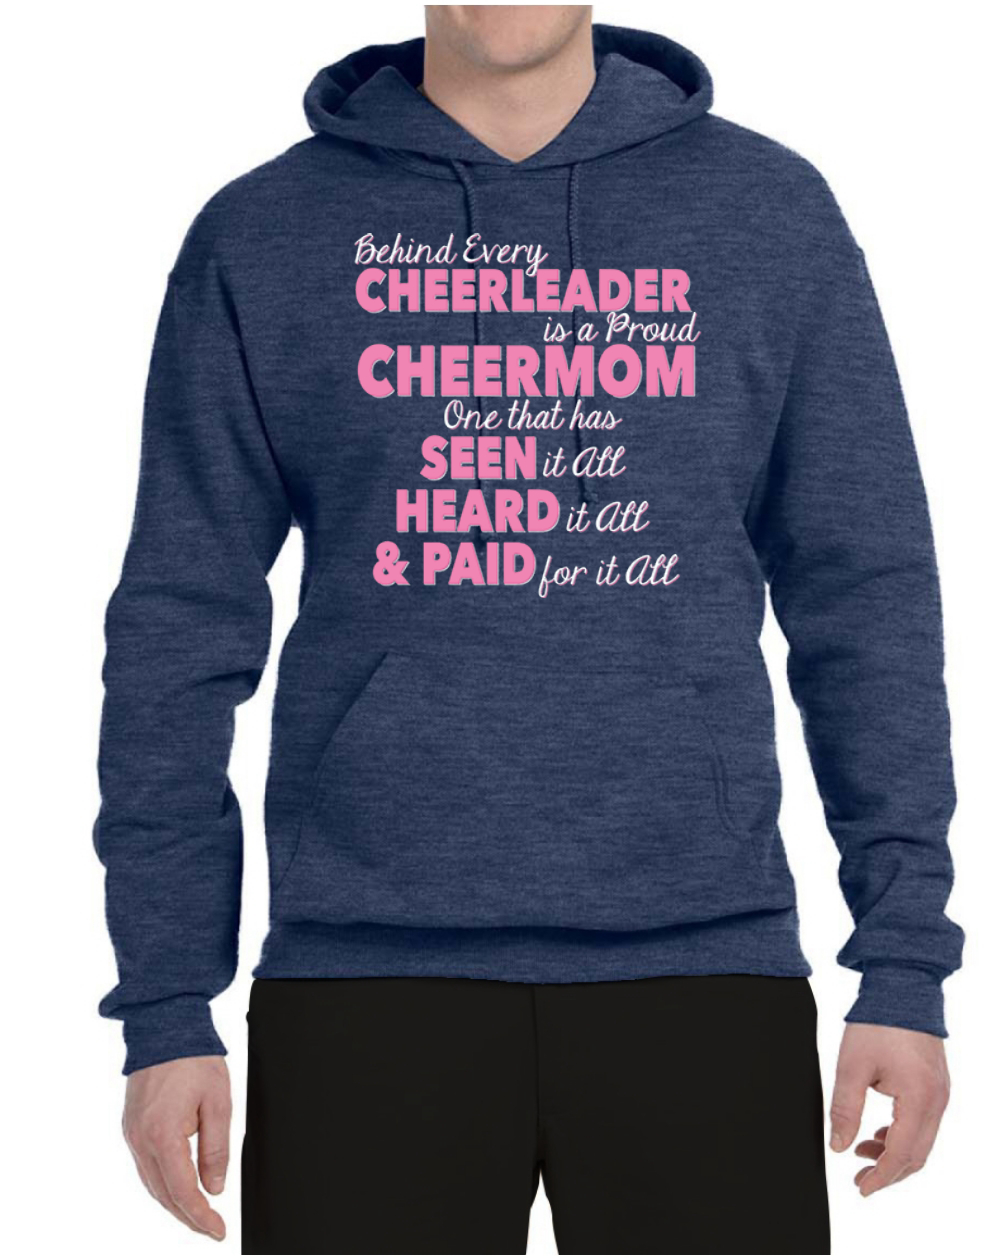 Behind Every Cheerleader Cheer Mom Matching Mothers Day Unisex Hoodies Sweater 